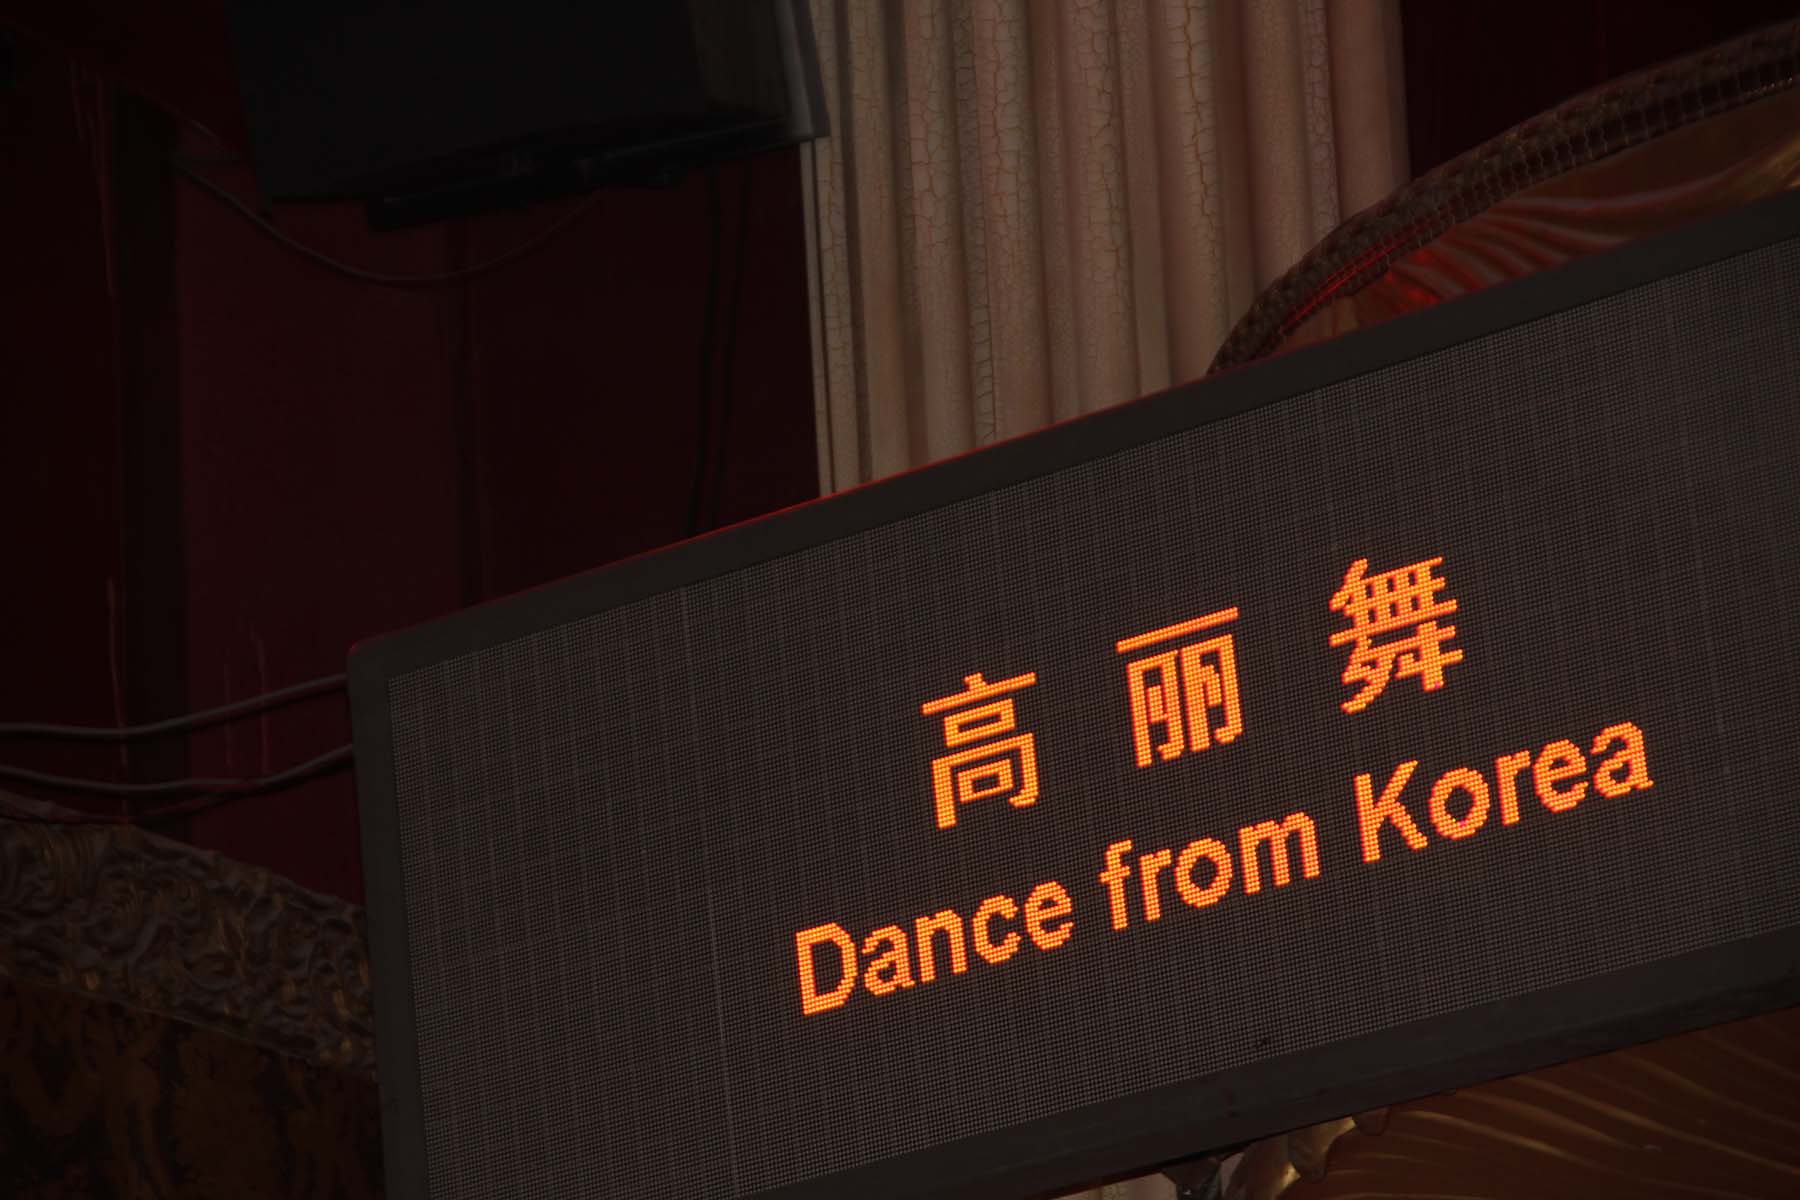 The next segment was described as Dance from Korea.